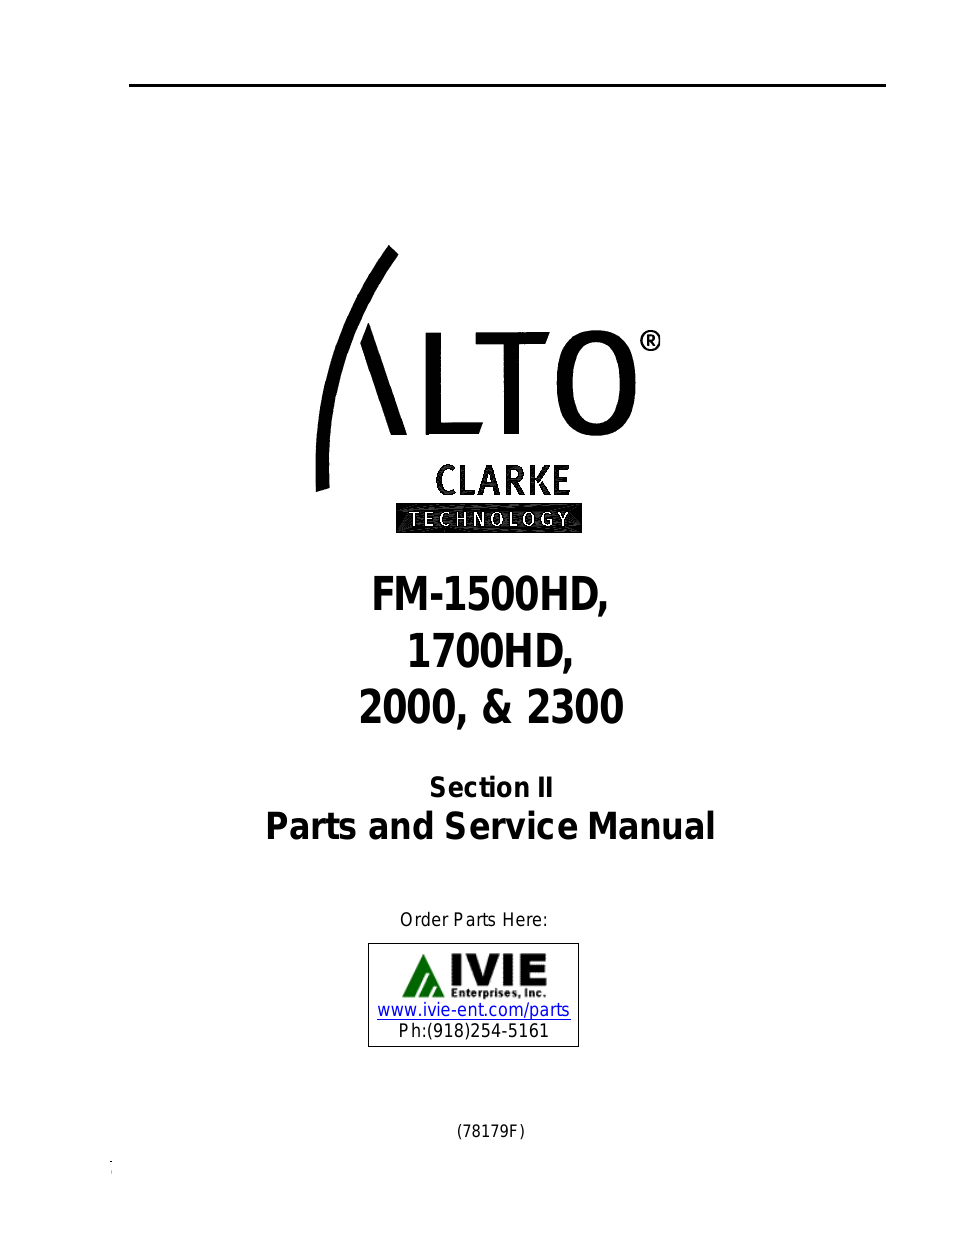 ALTO FM-1500HD